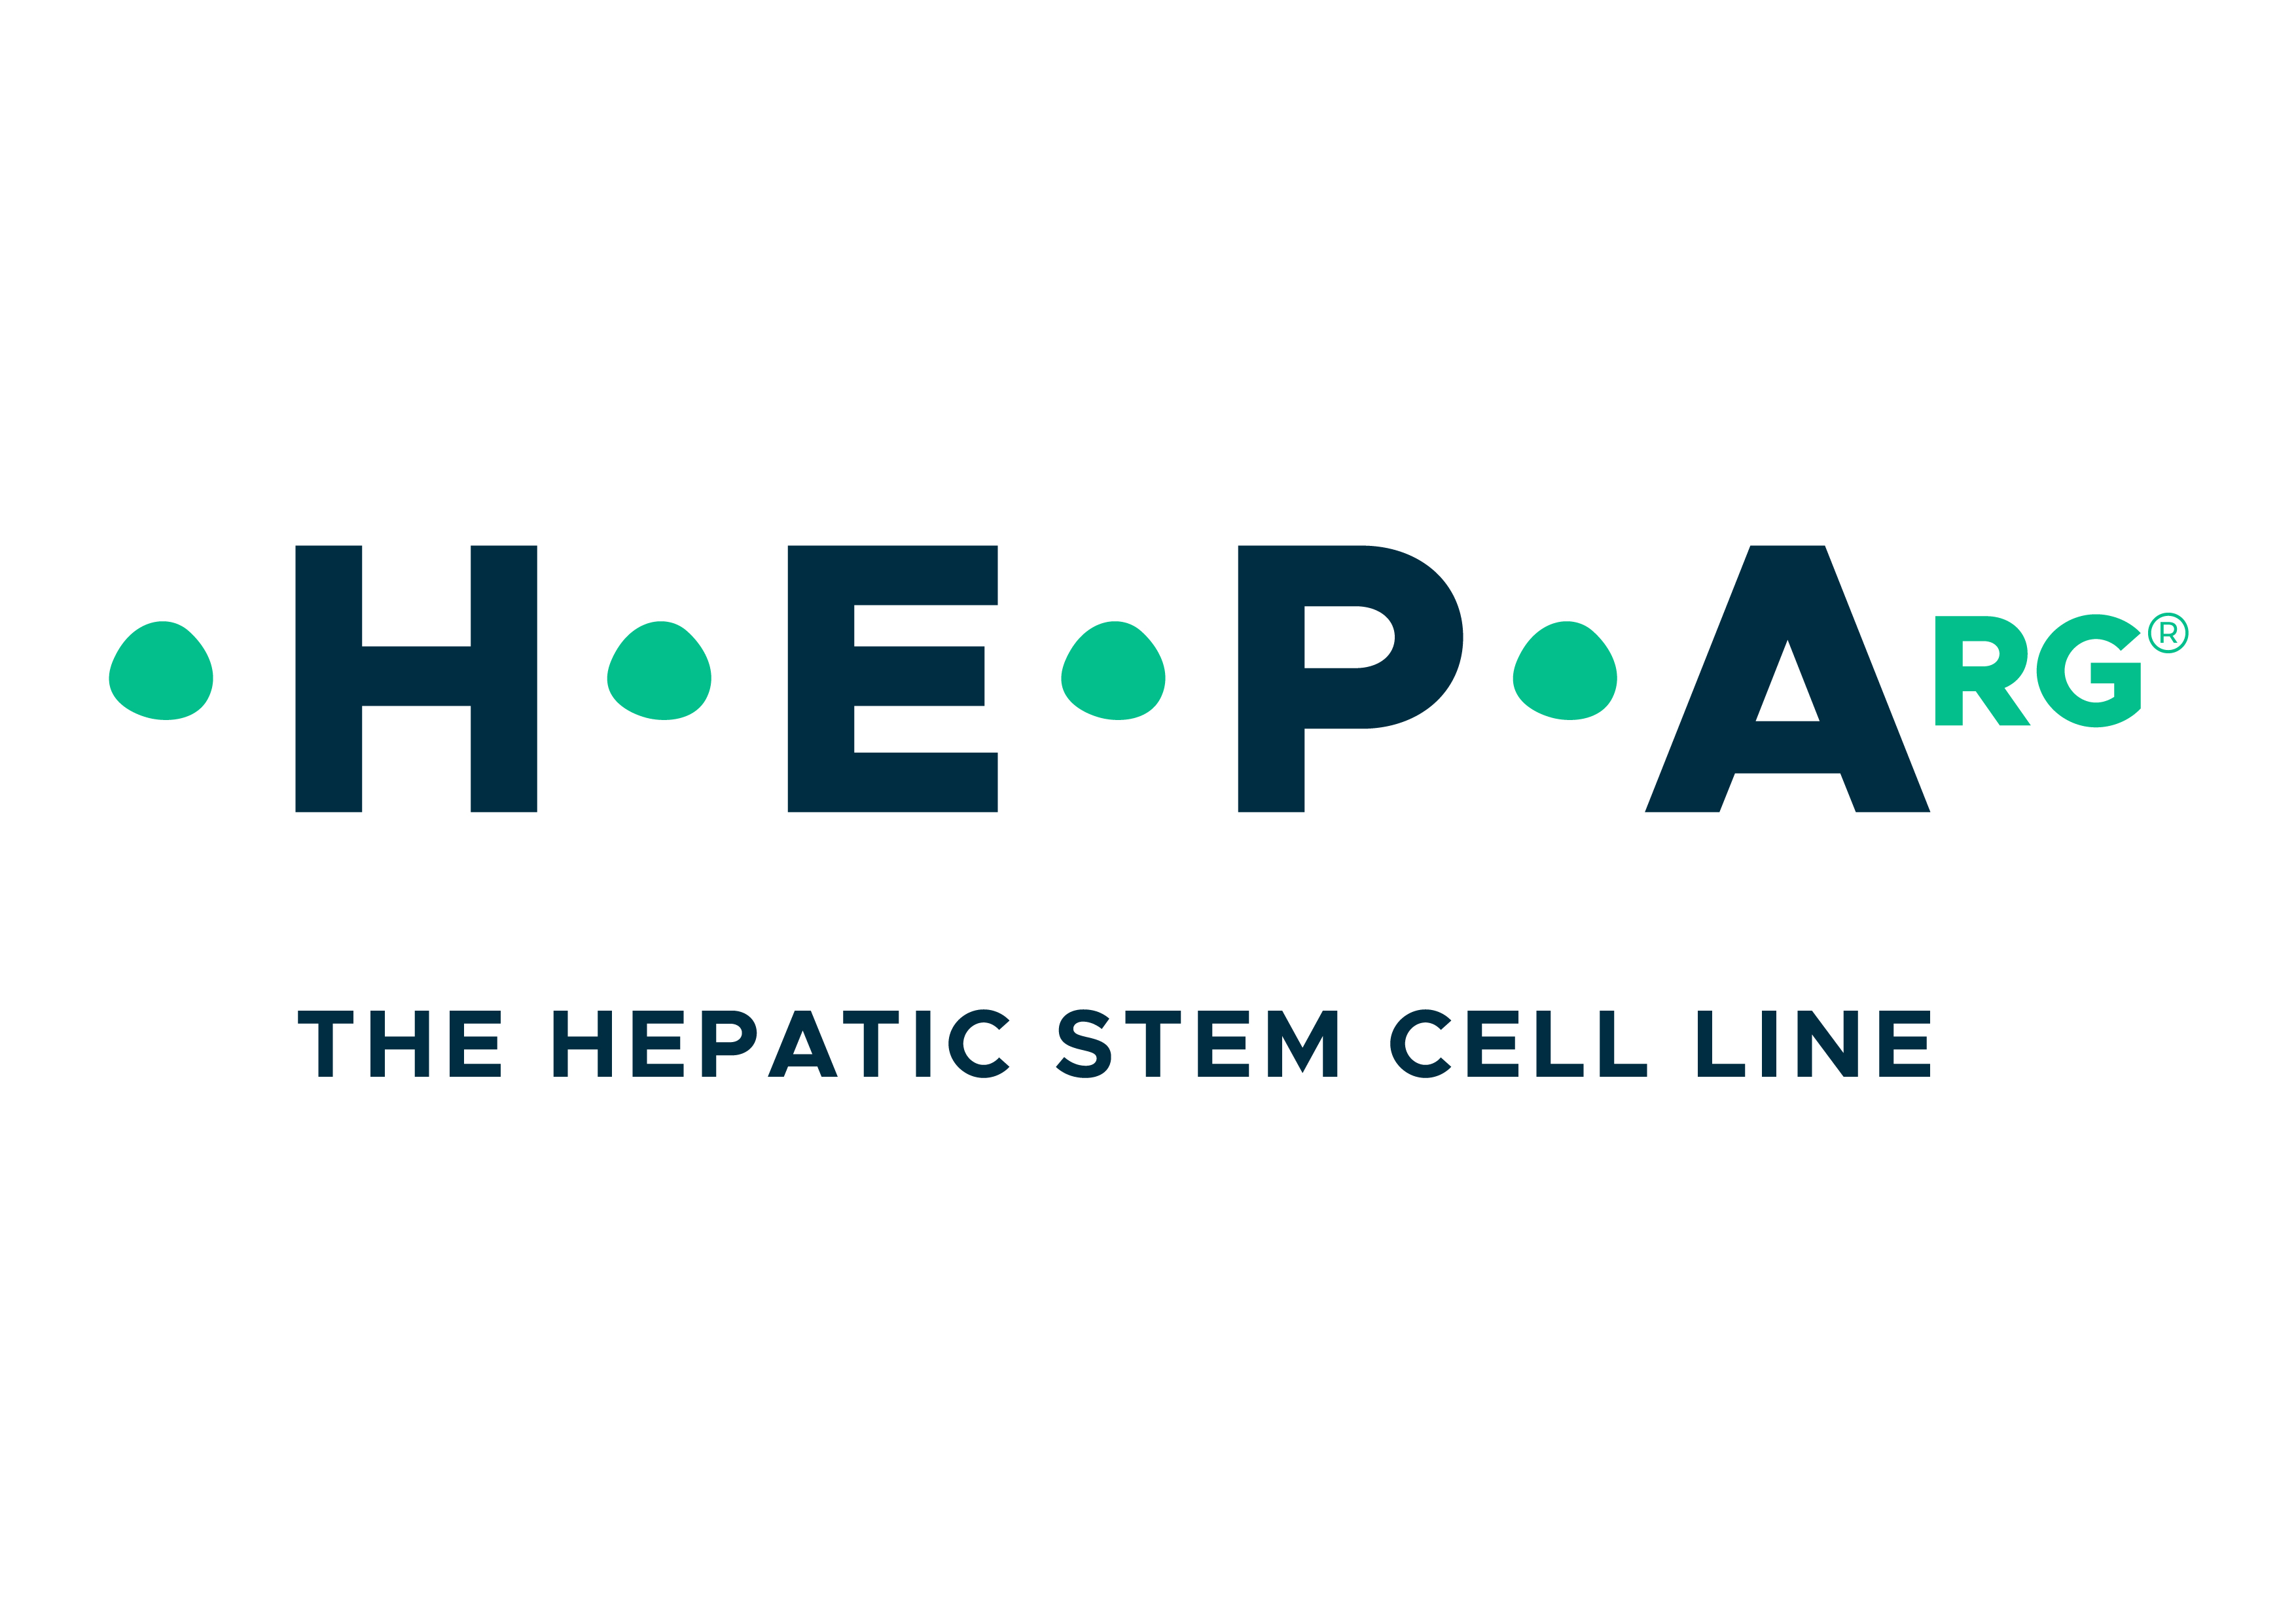 HepaRG logo